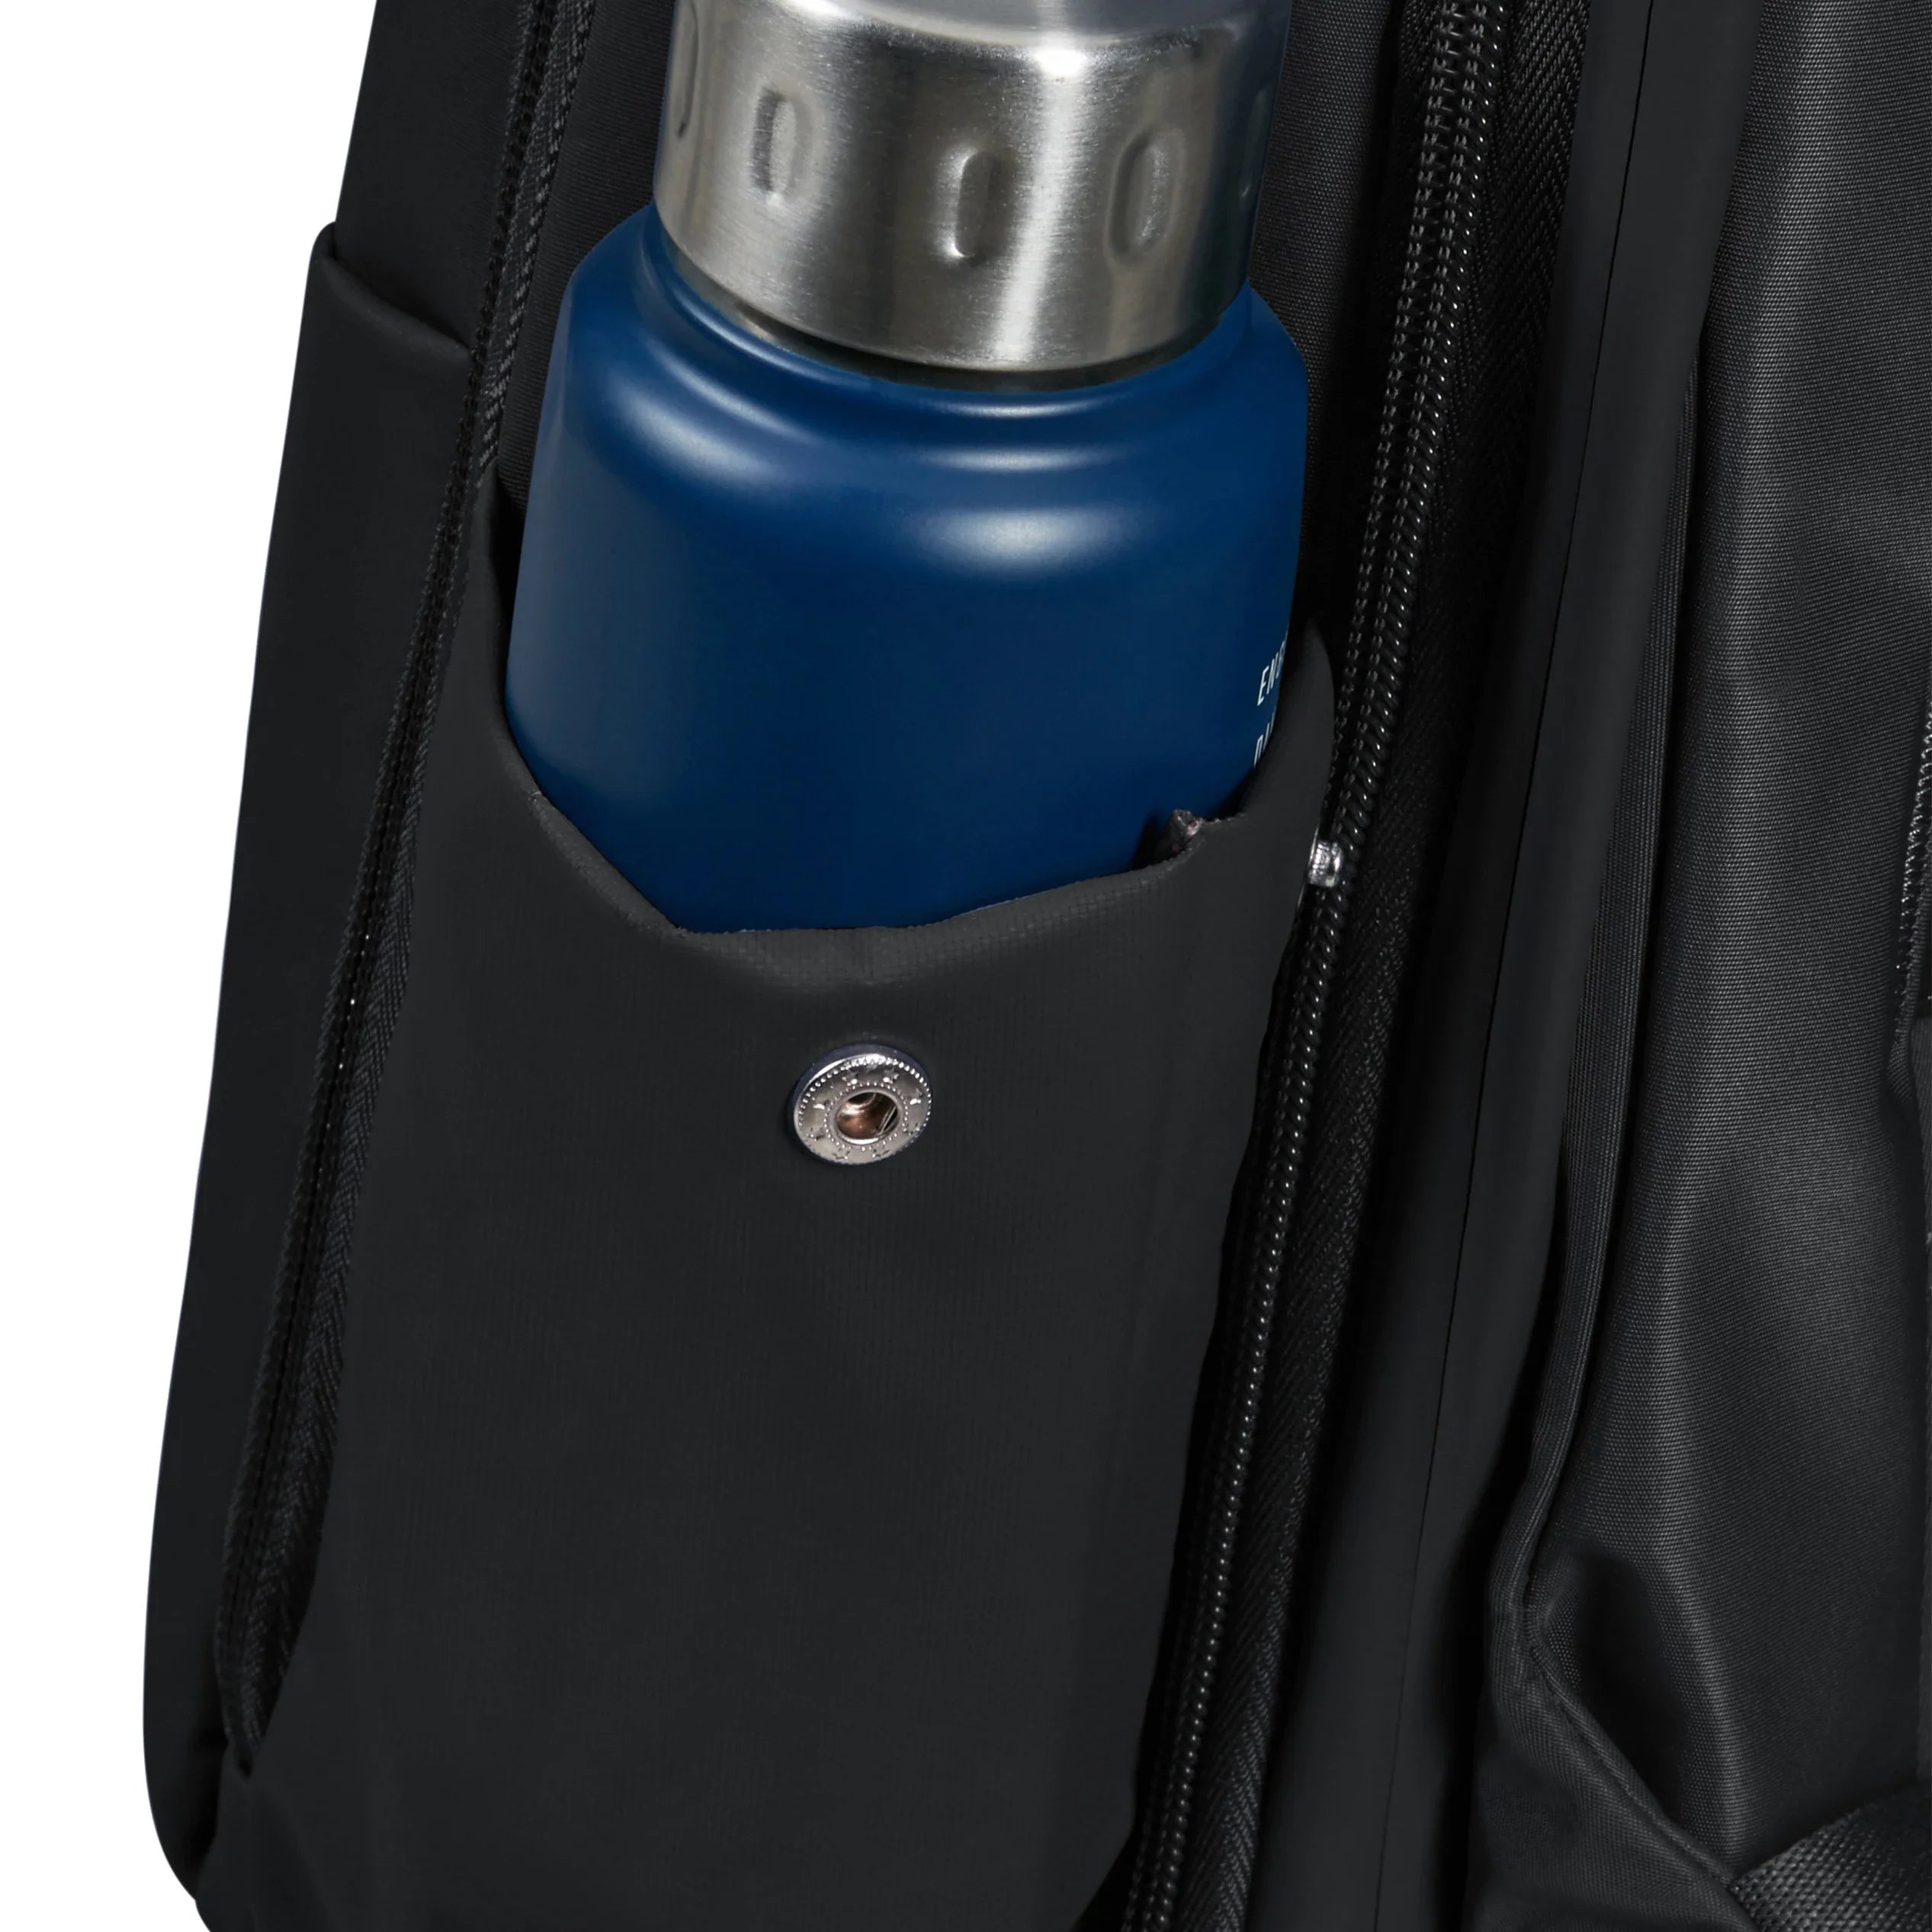 Samsonite Workationist Backpack 40 cm - Blueberry